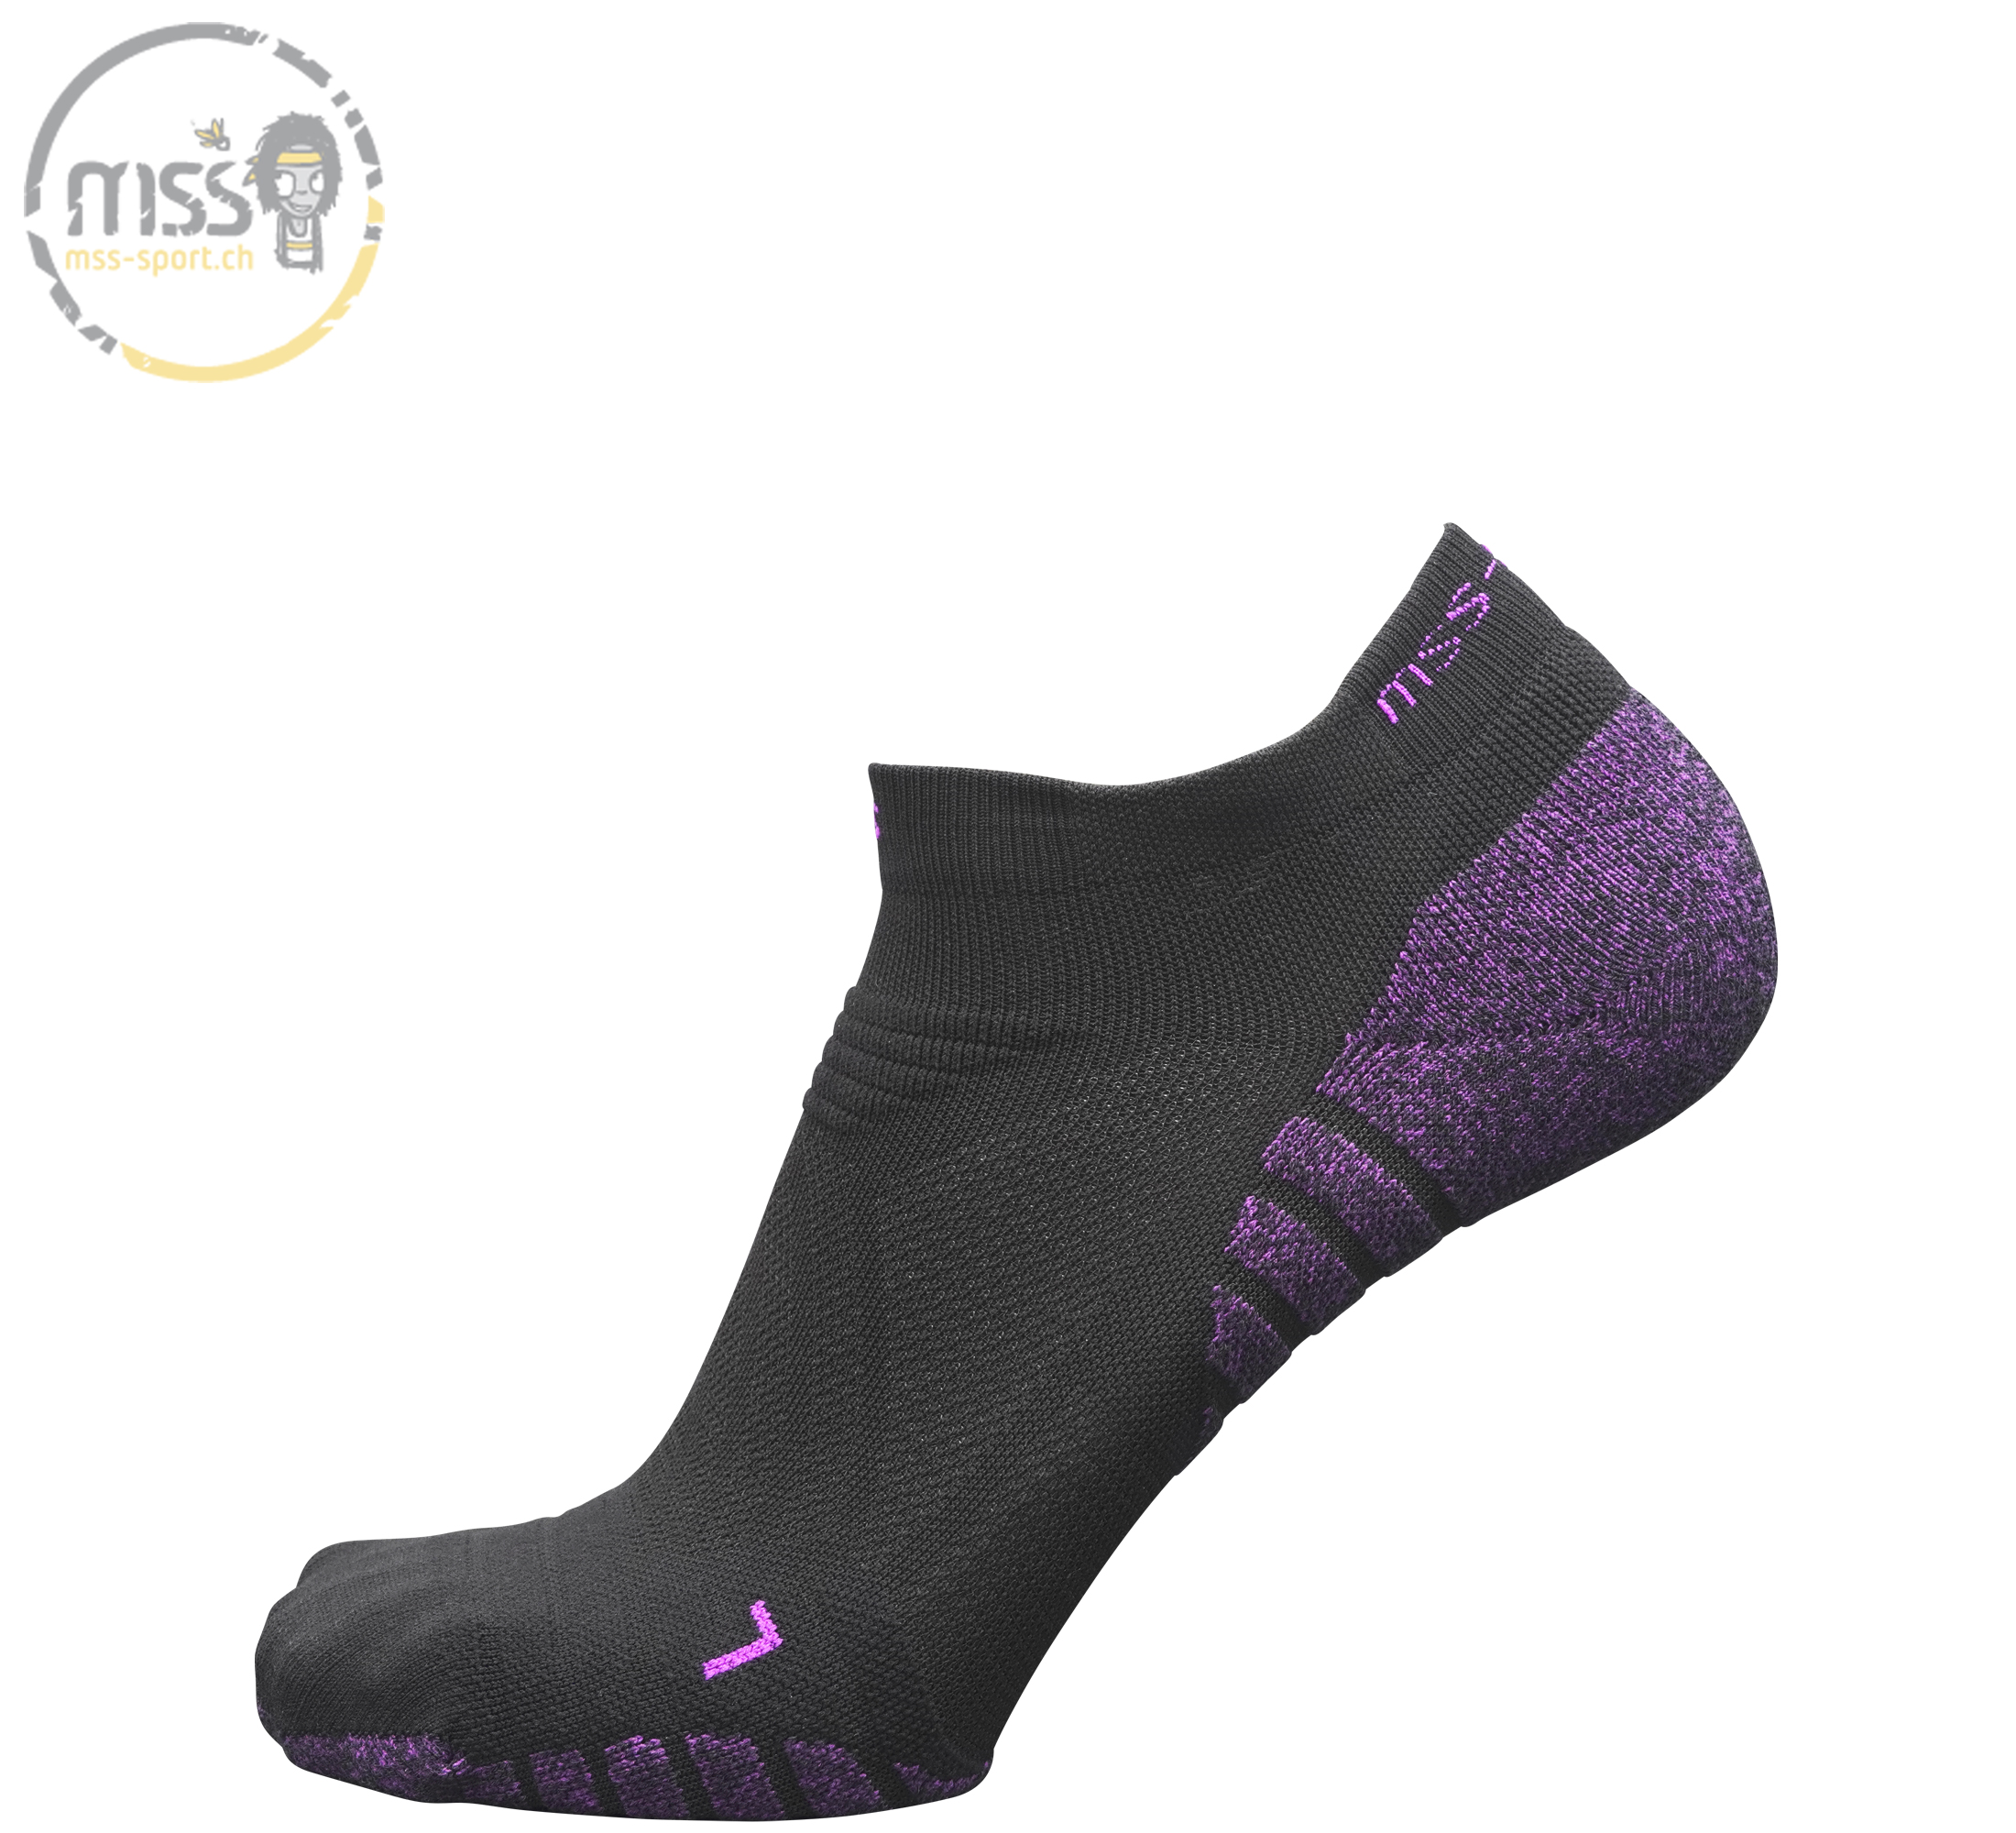 mss-socks GO 7300 low Lady black purple